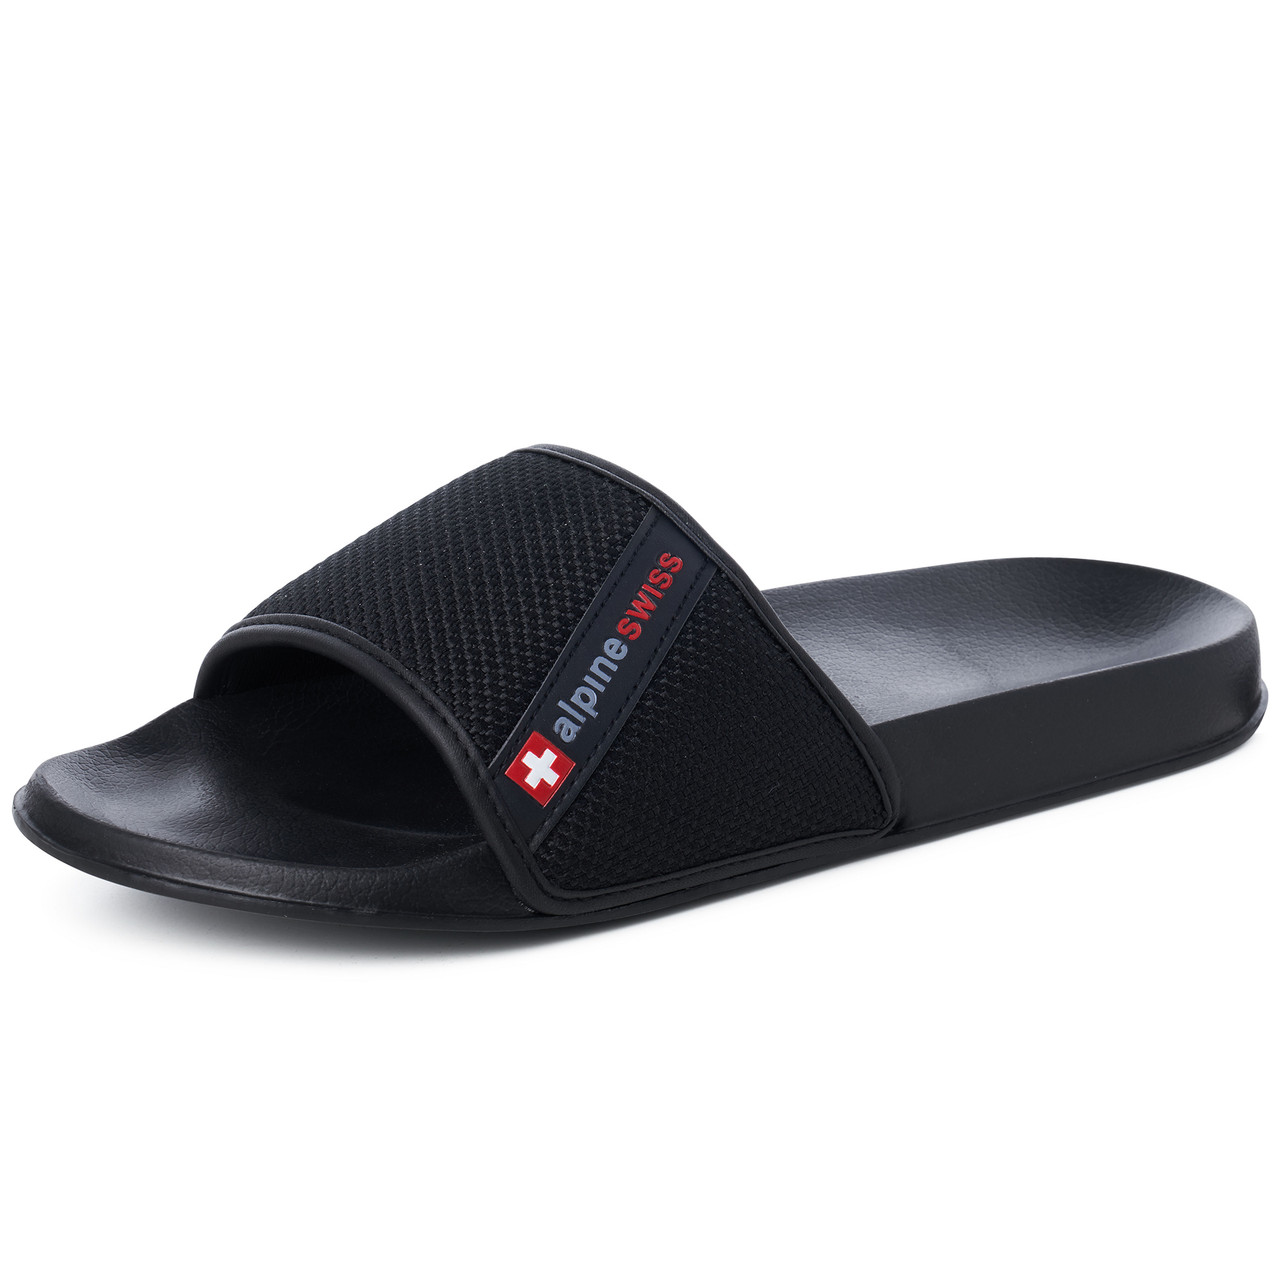 slides and sandals